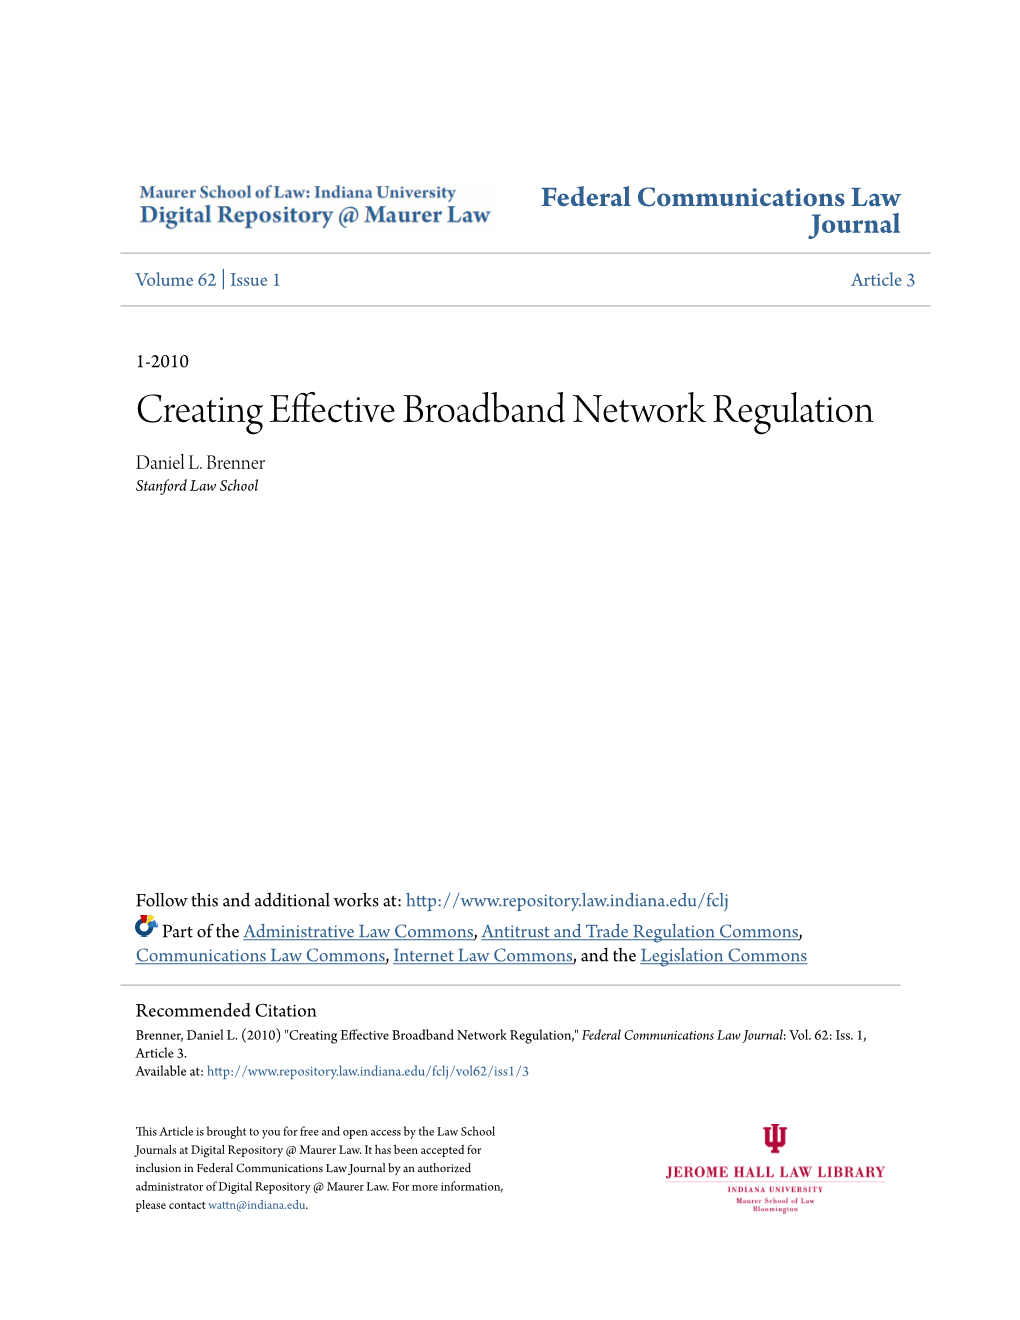 Creating Effective Broadband Network Regulation Daniel L